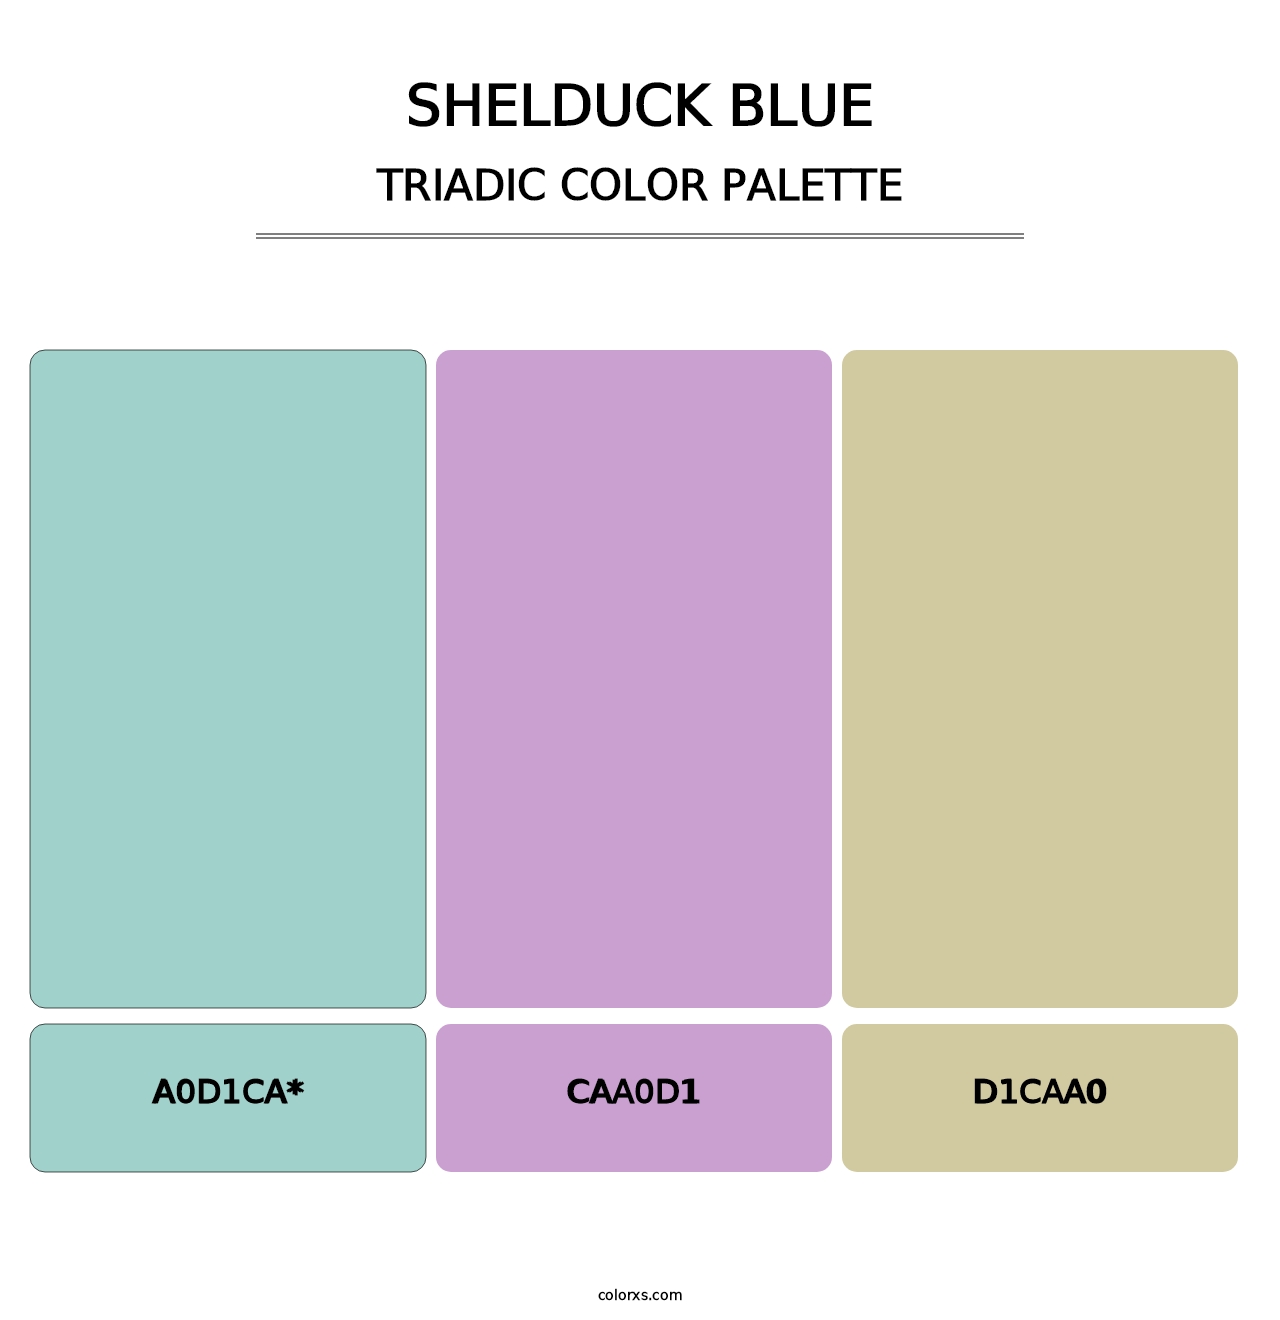 Shelduck Blue - Triadic Color Palette